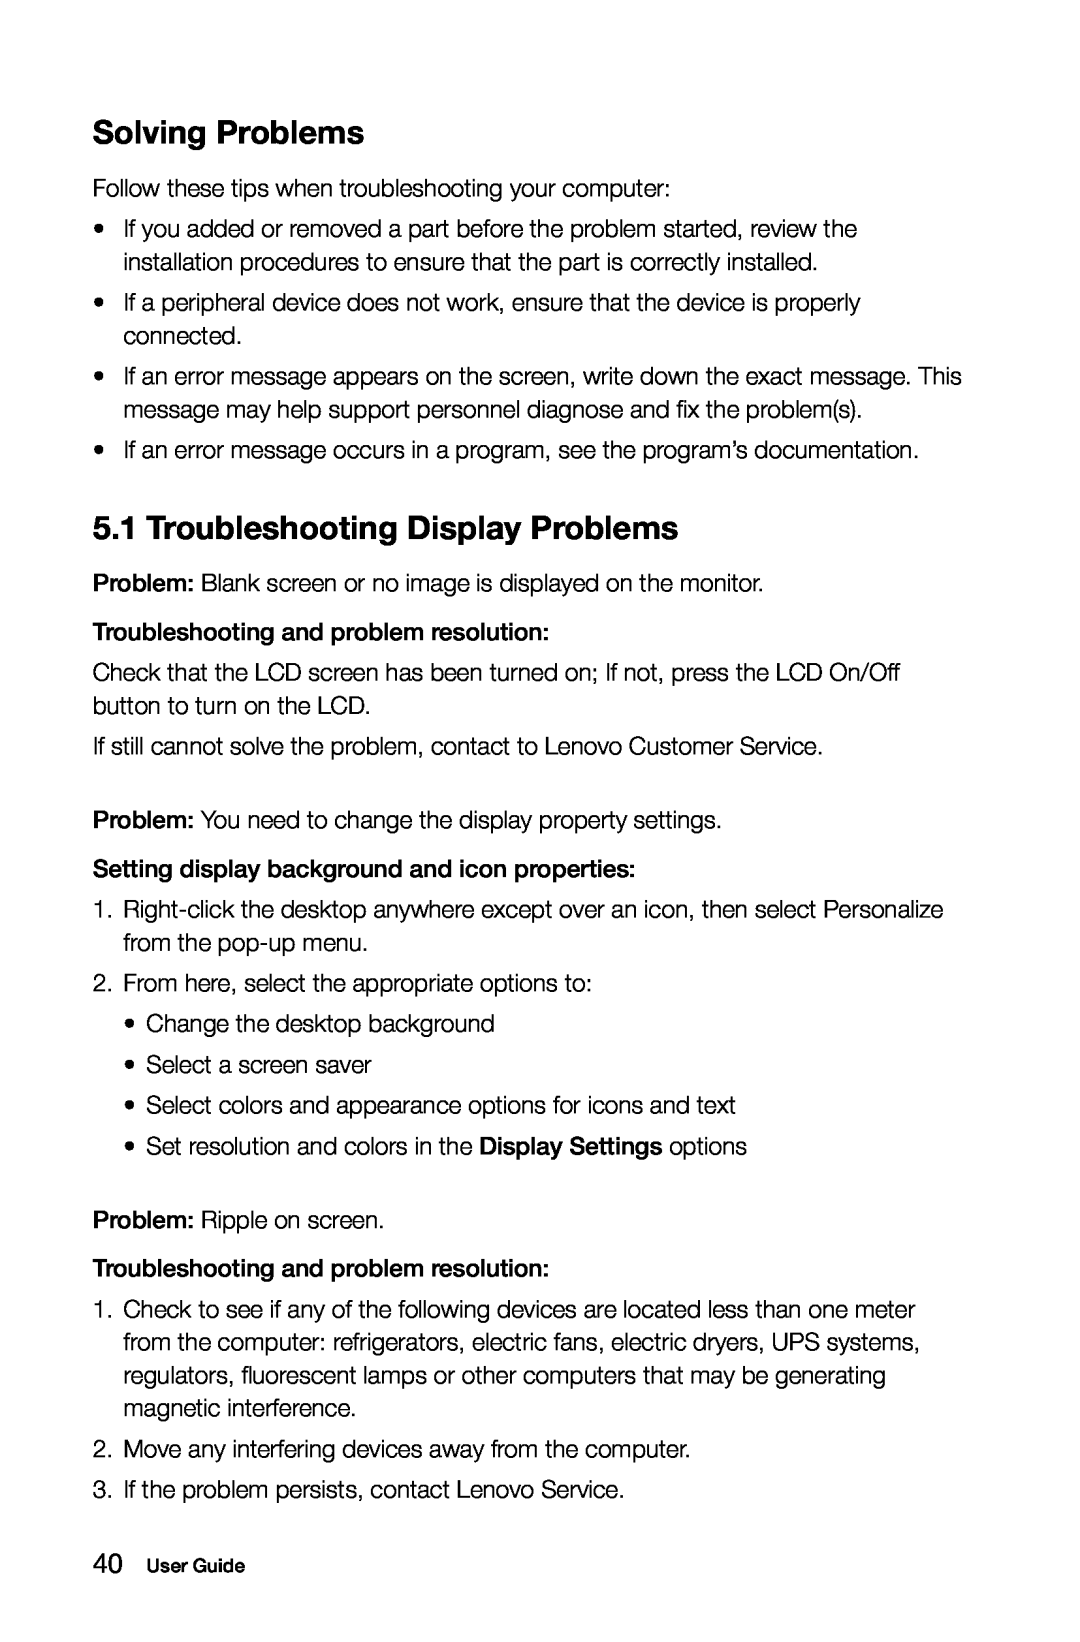 Lenovo 2567 [B345] 10100, 97, 4749 [B545], 3363 [B540p] 10098 manual Solving Problems, Troubleshooting Display Problems 